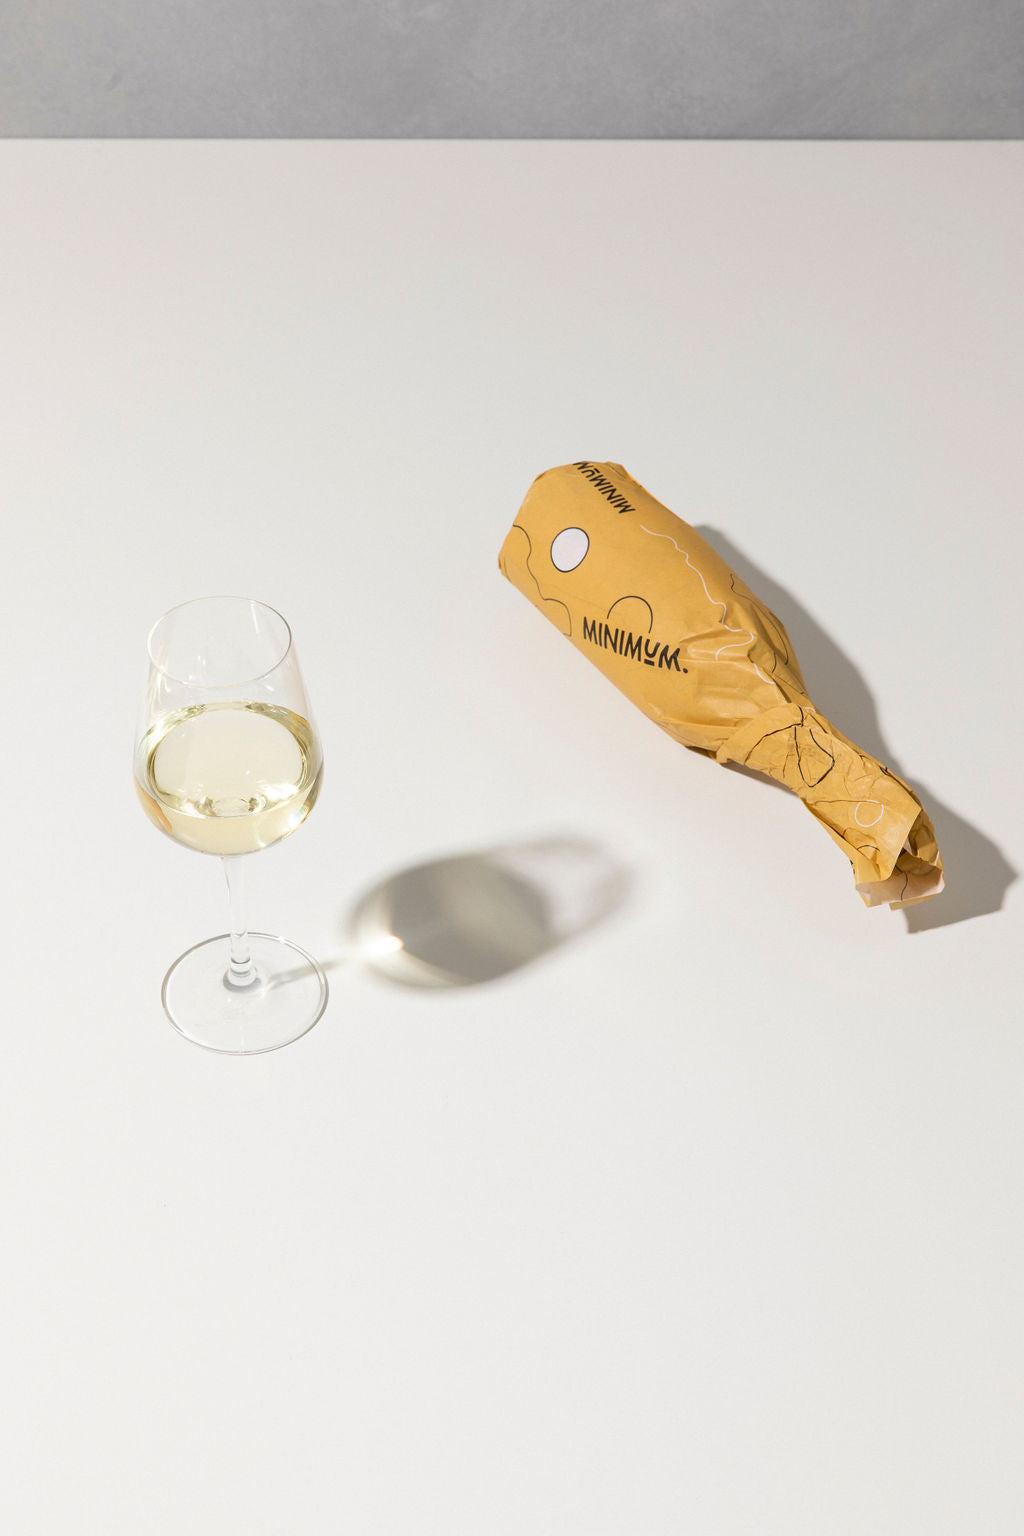 WHITE → 2018 Chardonnay.